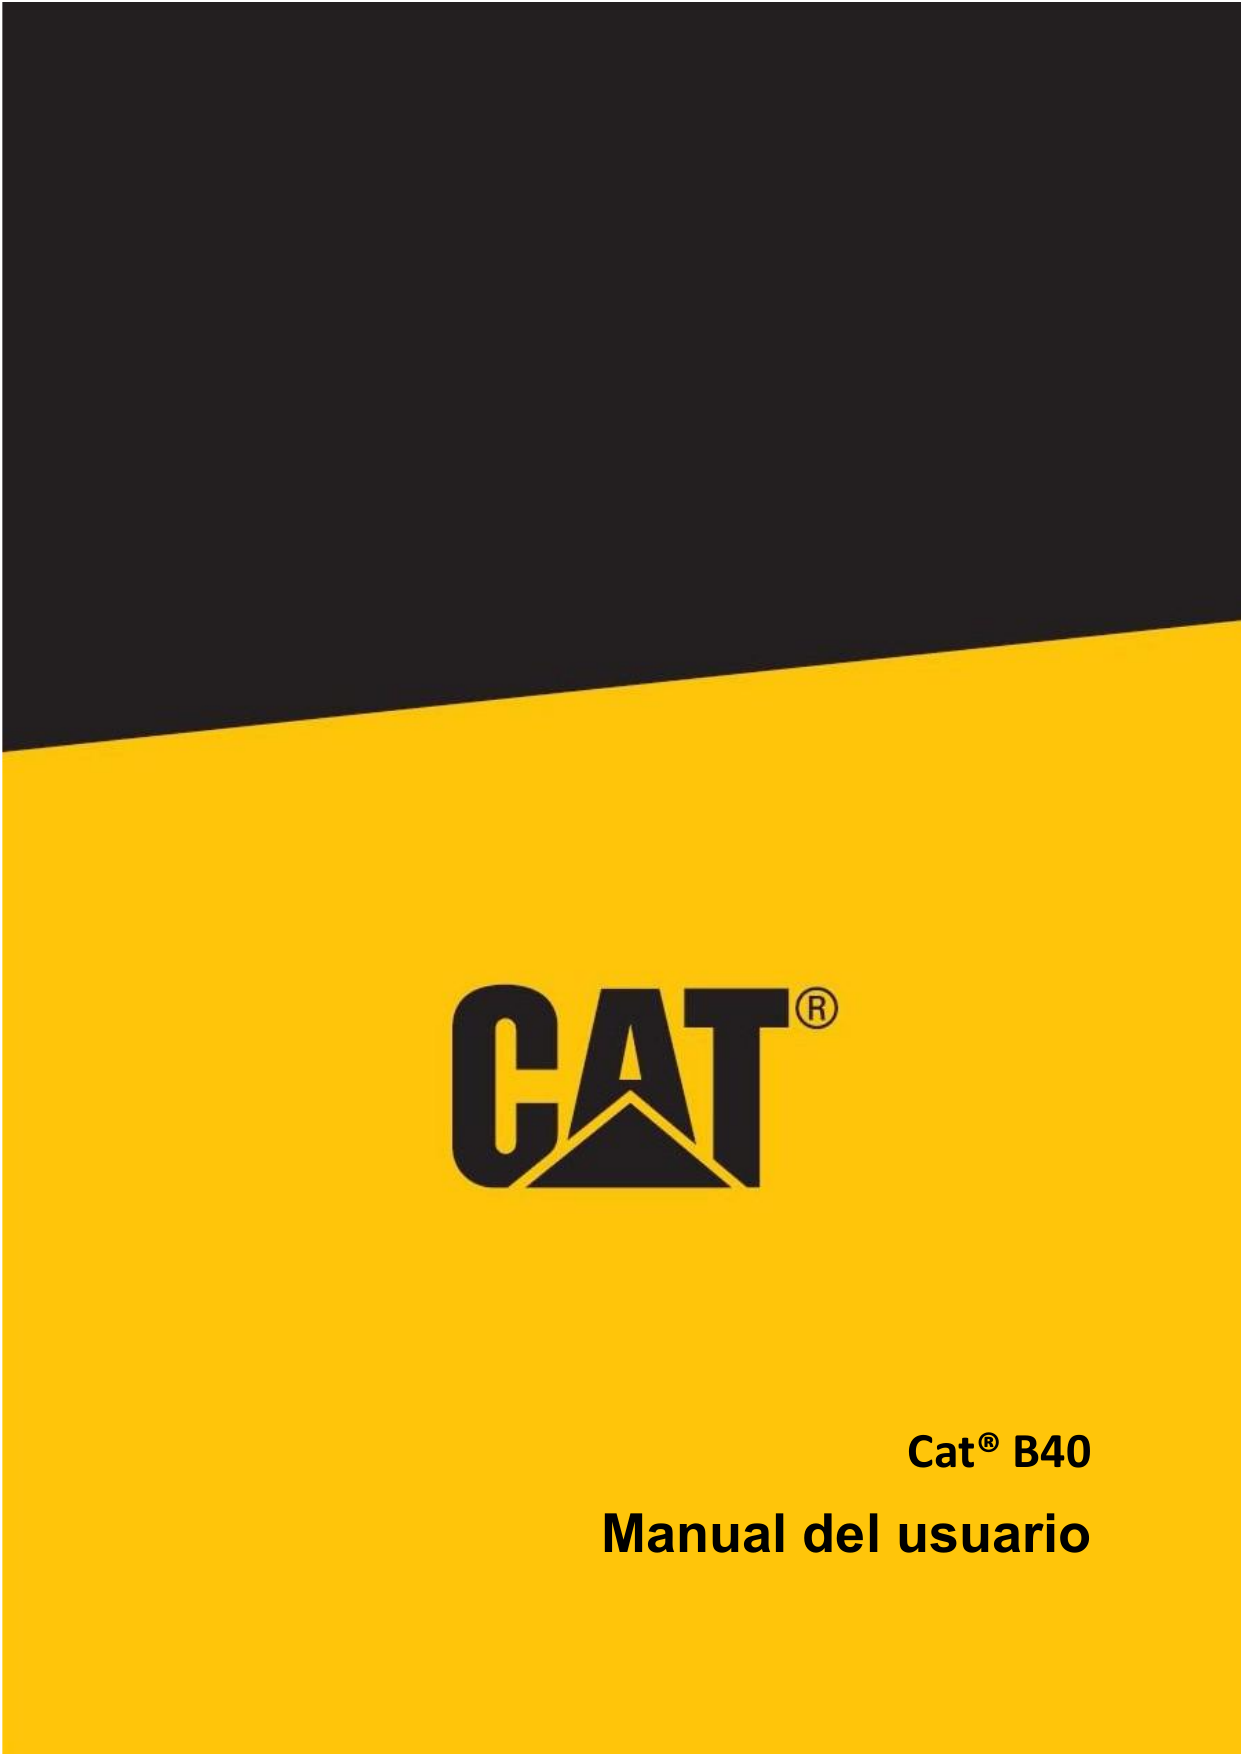 Cat® B40Manual del usuario